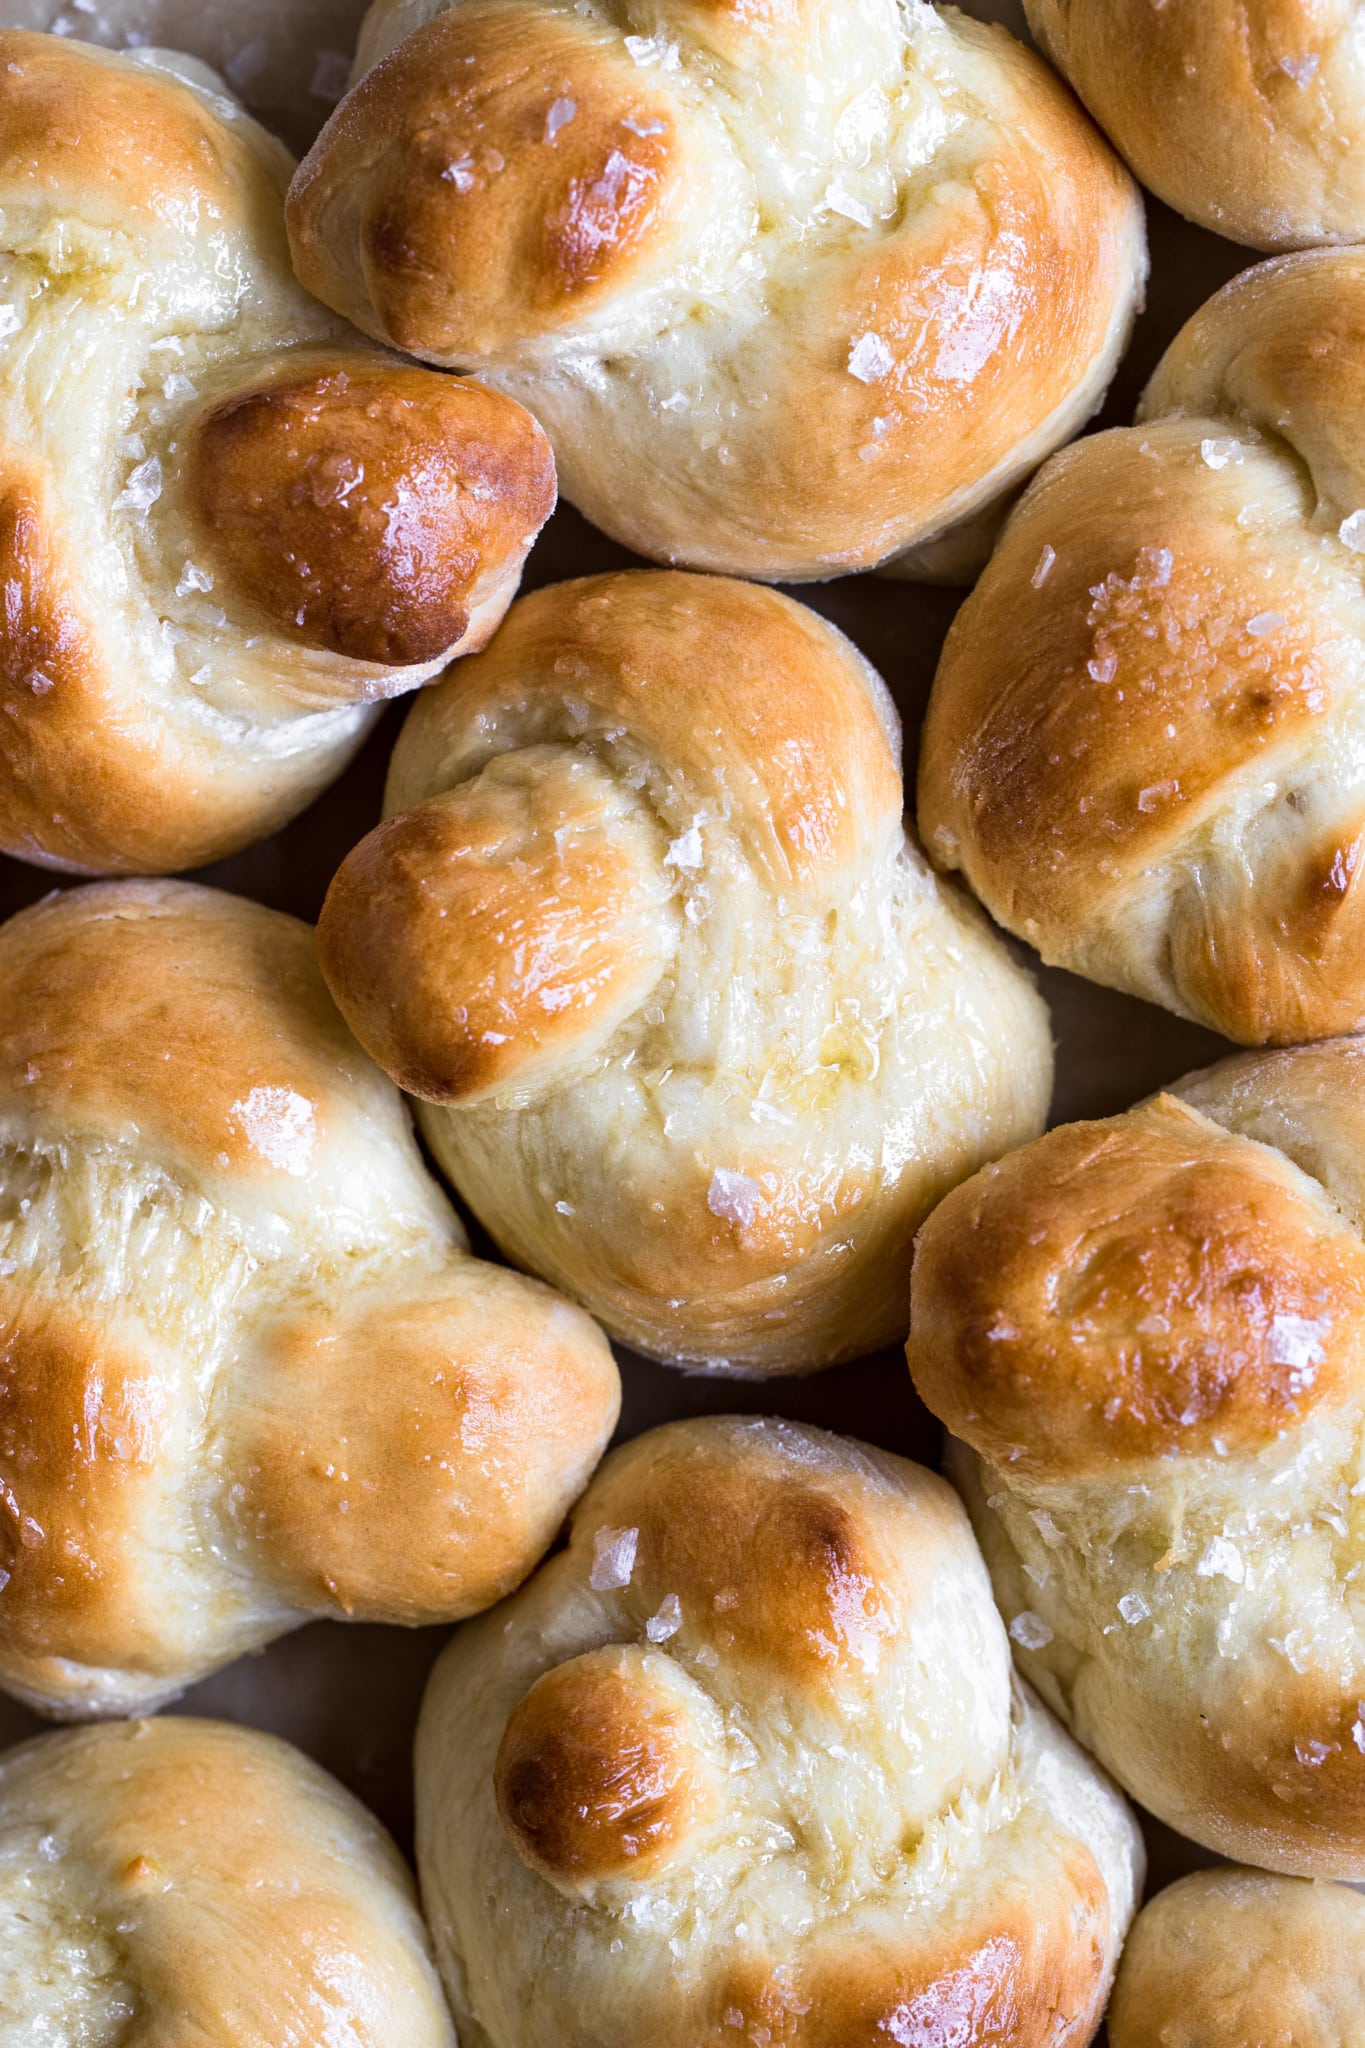 freshly baked bread rolls